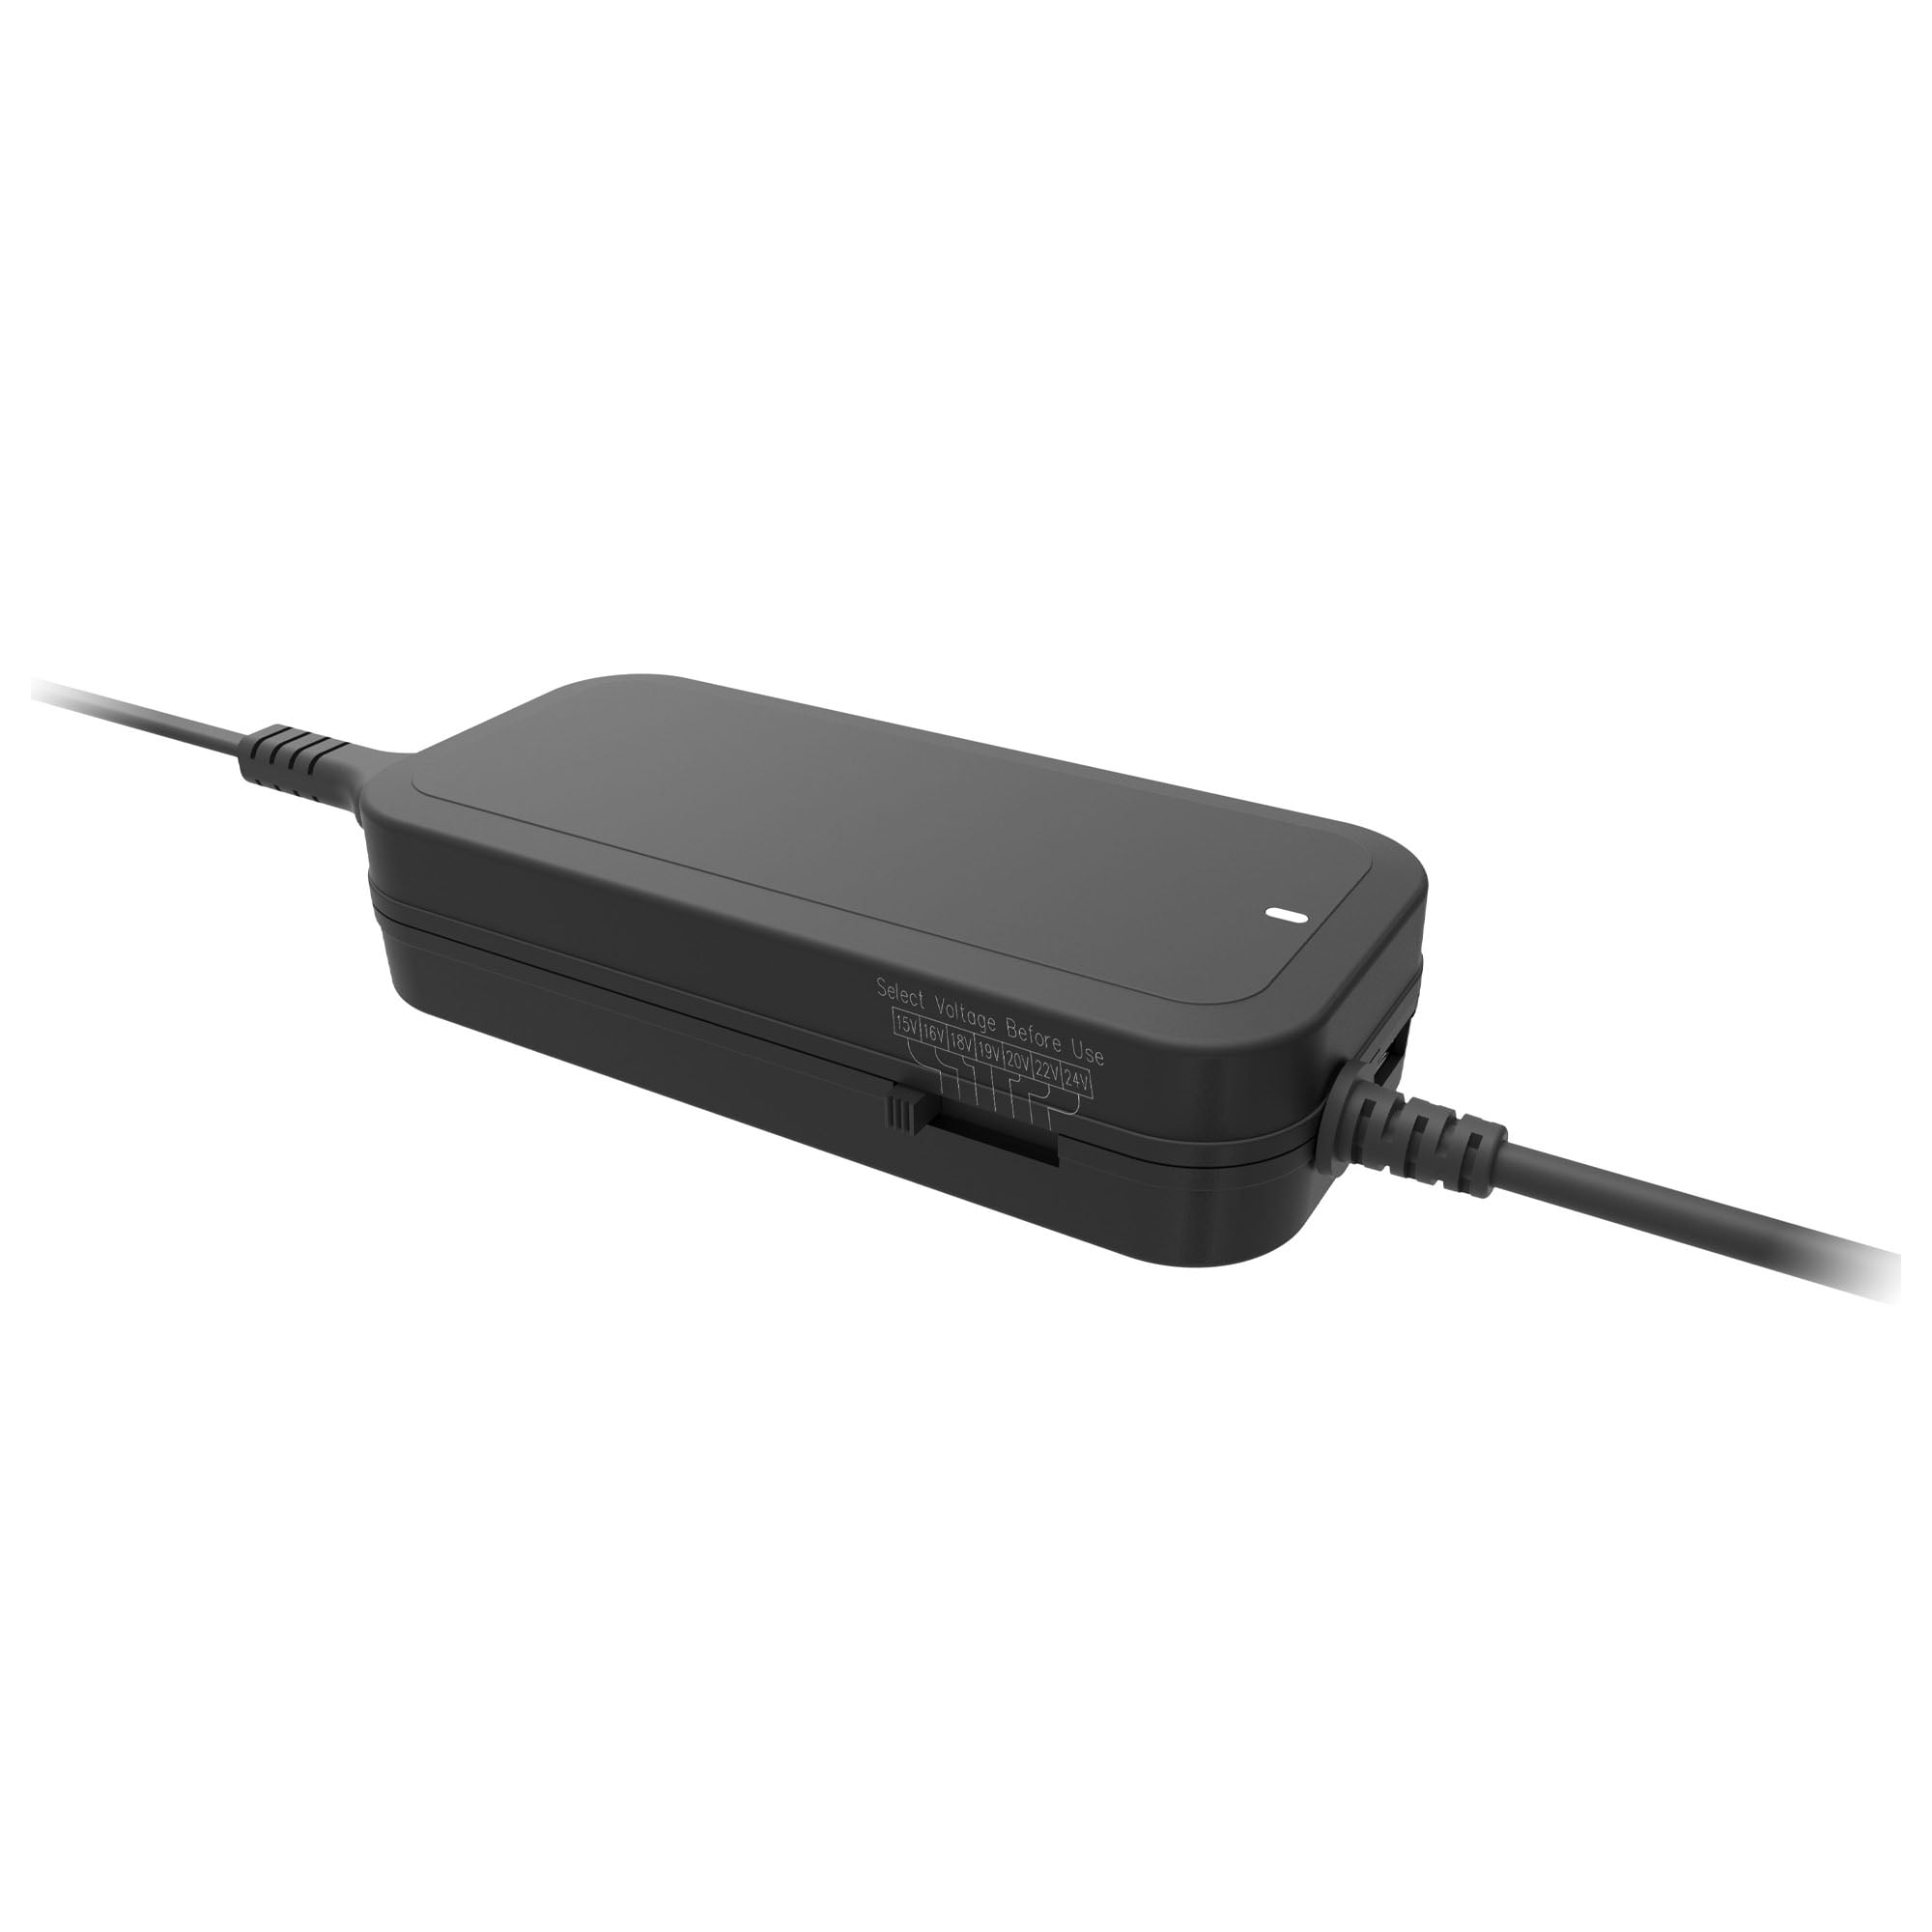 Geleend lip Manier Universal Soundbar Power Adapter, Replace your Power Cord, Variable Voltage  15V - 24V, 90 Watt - Walmart.com